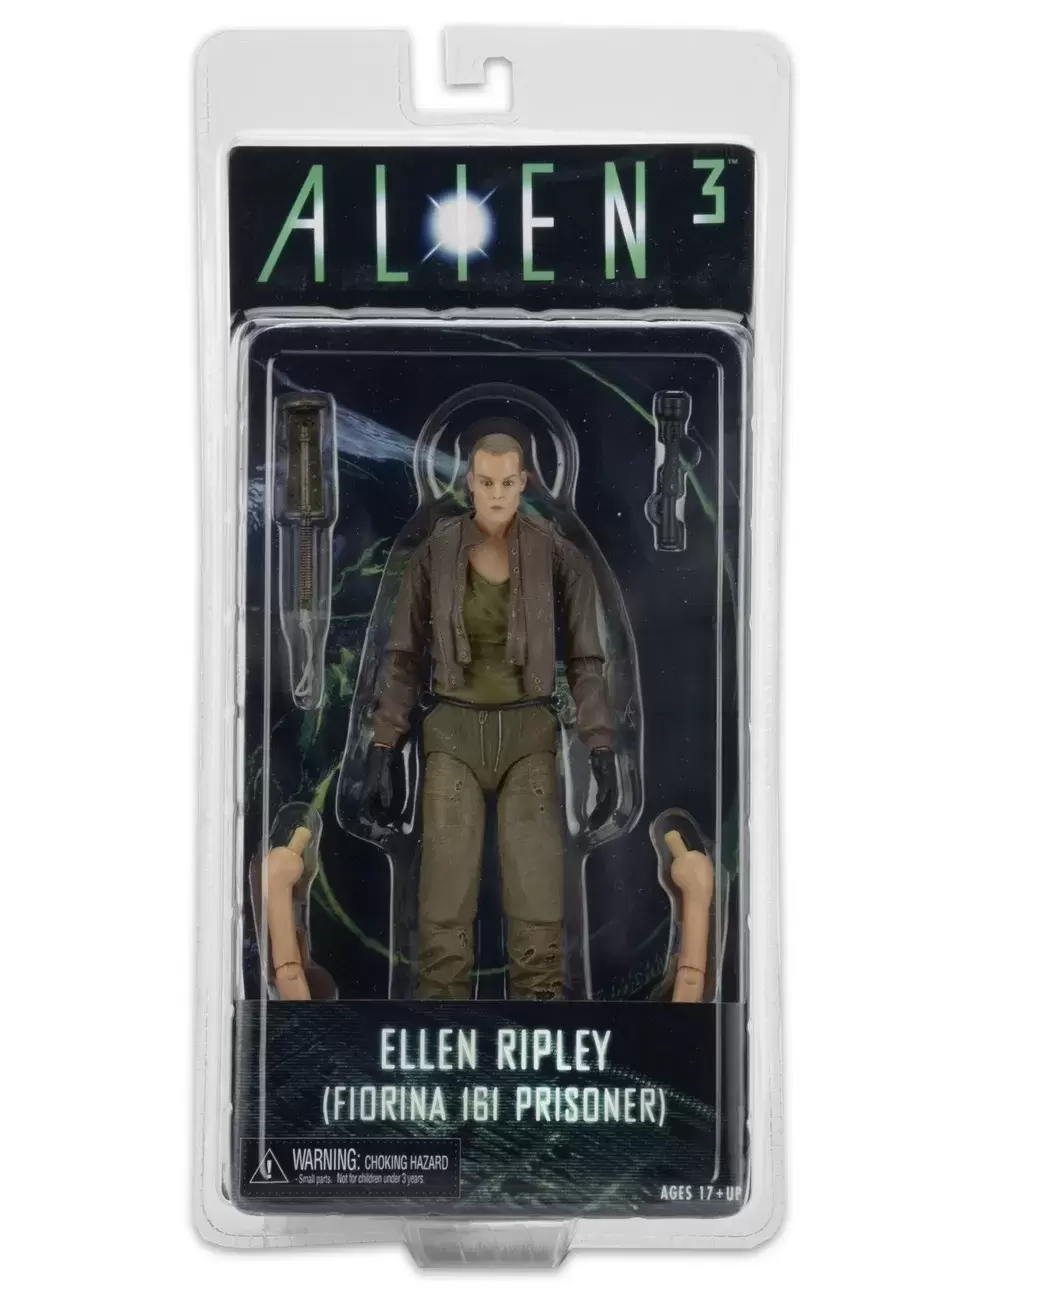 NECA - Alien 3 - Ellen Ripley Fiorina 161 prisoner